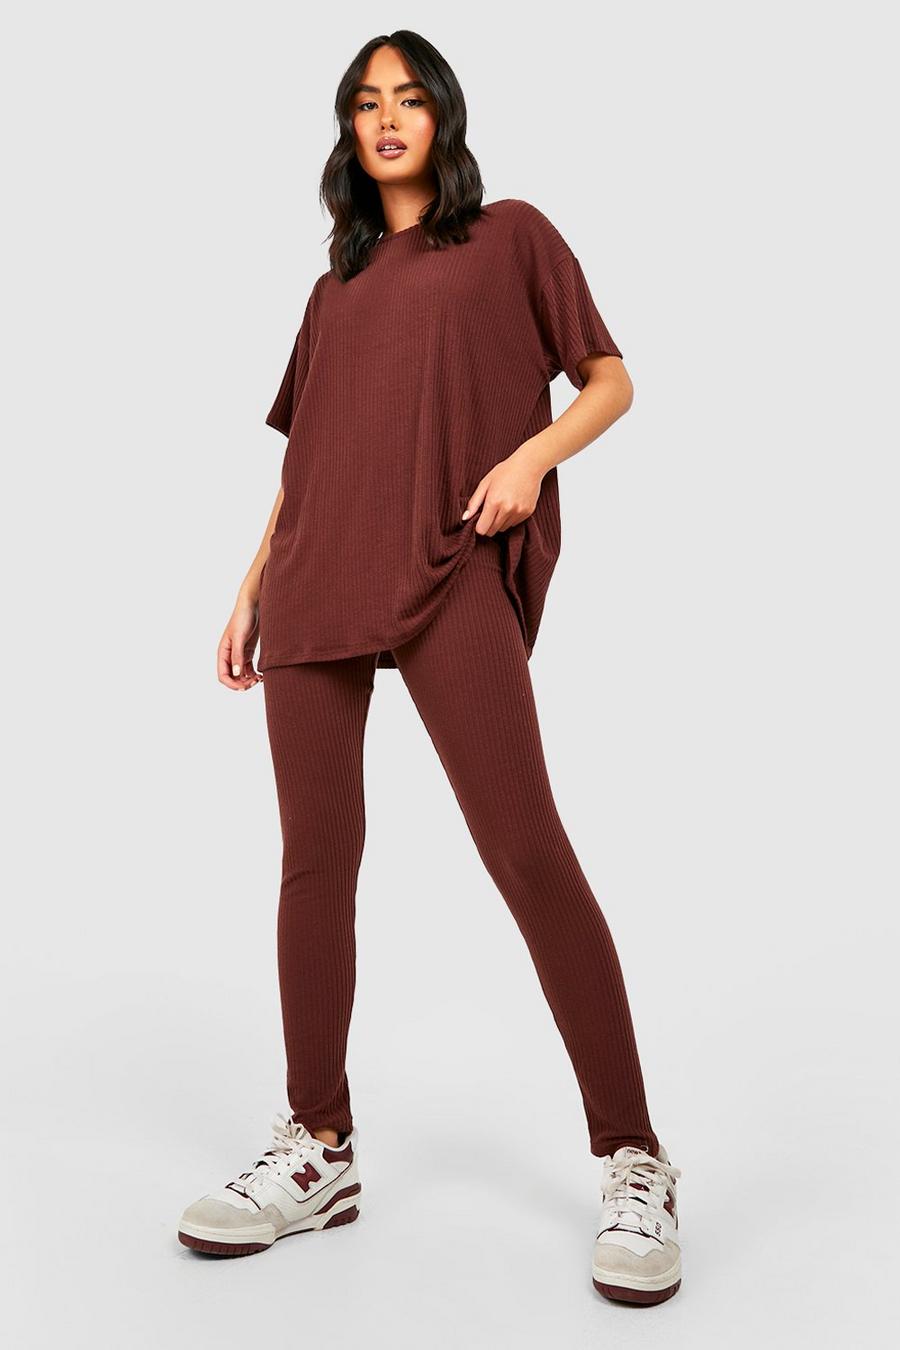 Oversized T Shirt & Leggings Matching Set Outfit